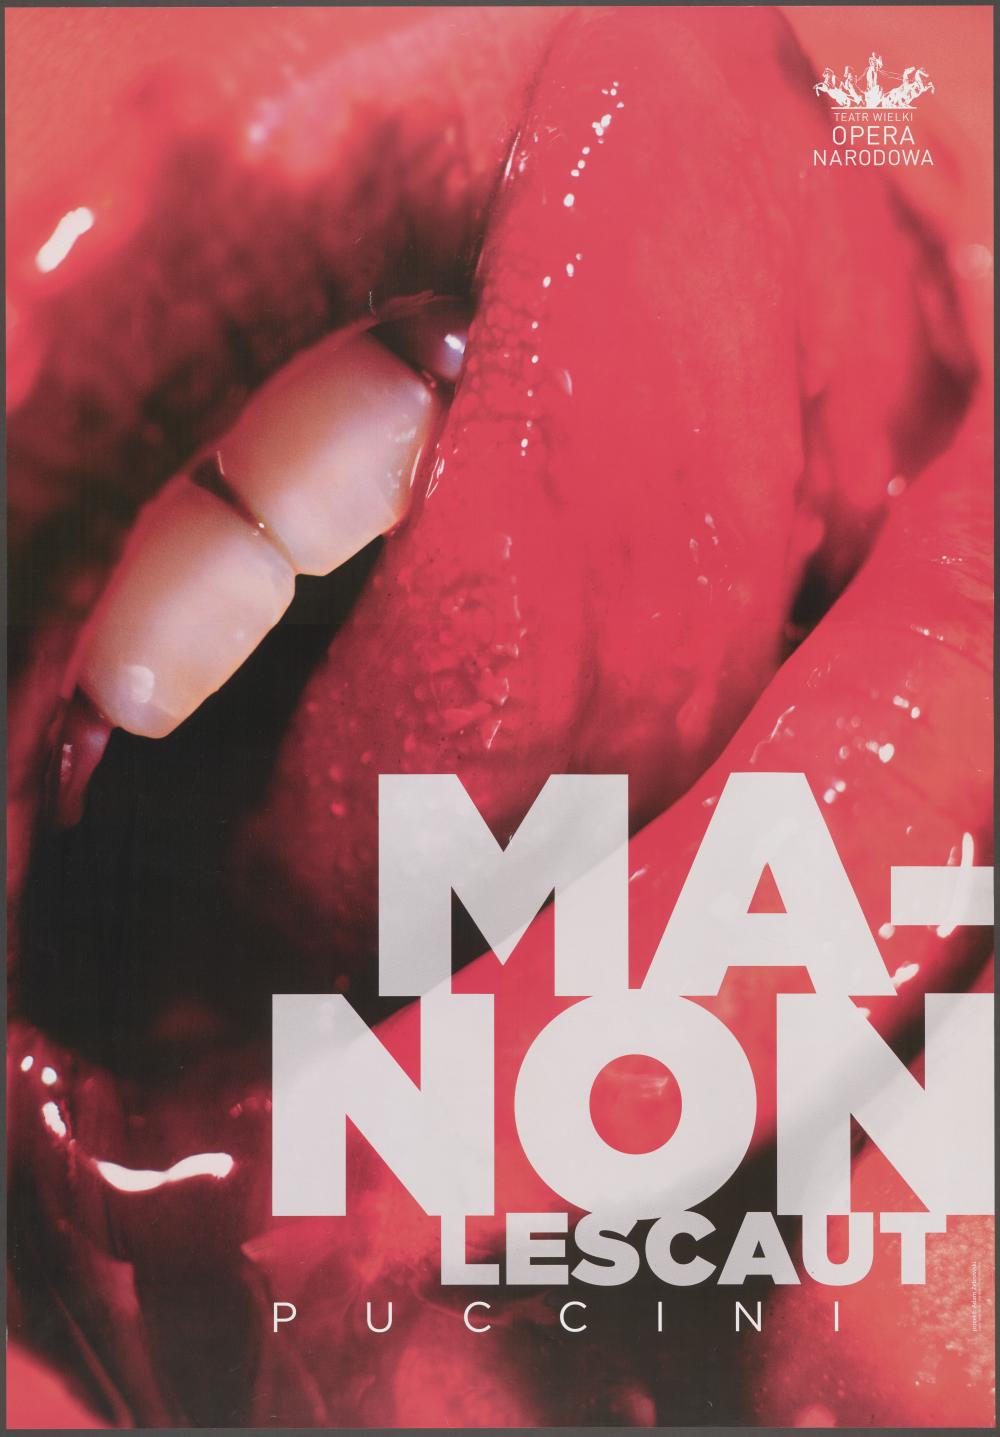 Plakat „Manon Lescaut” Giacomo Puccini 23-10-2012